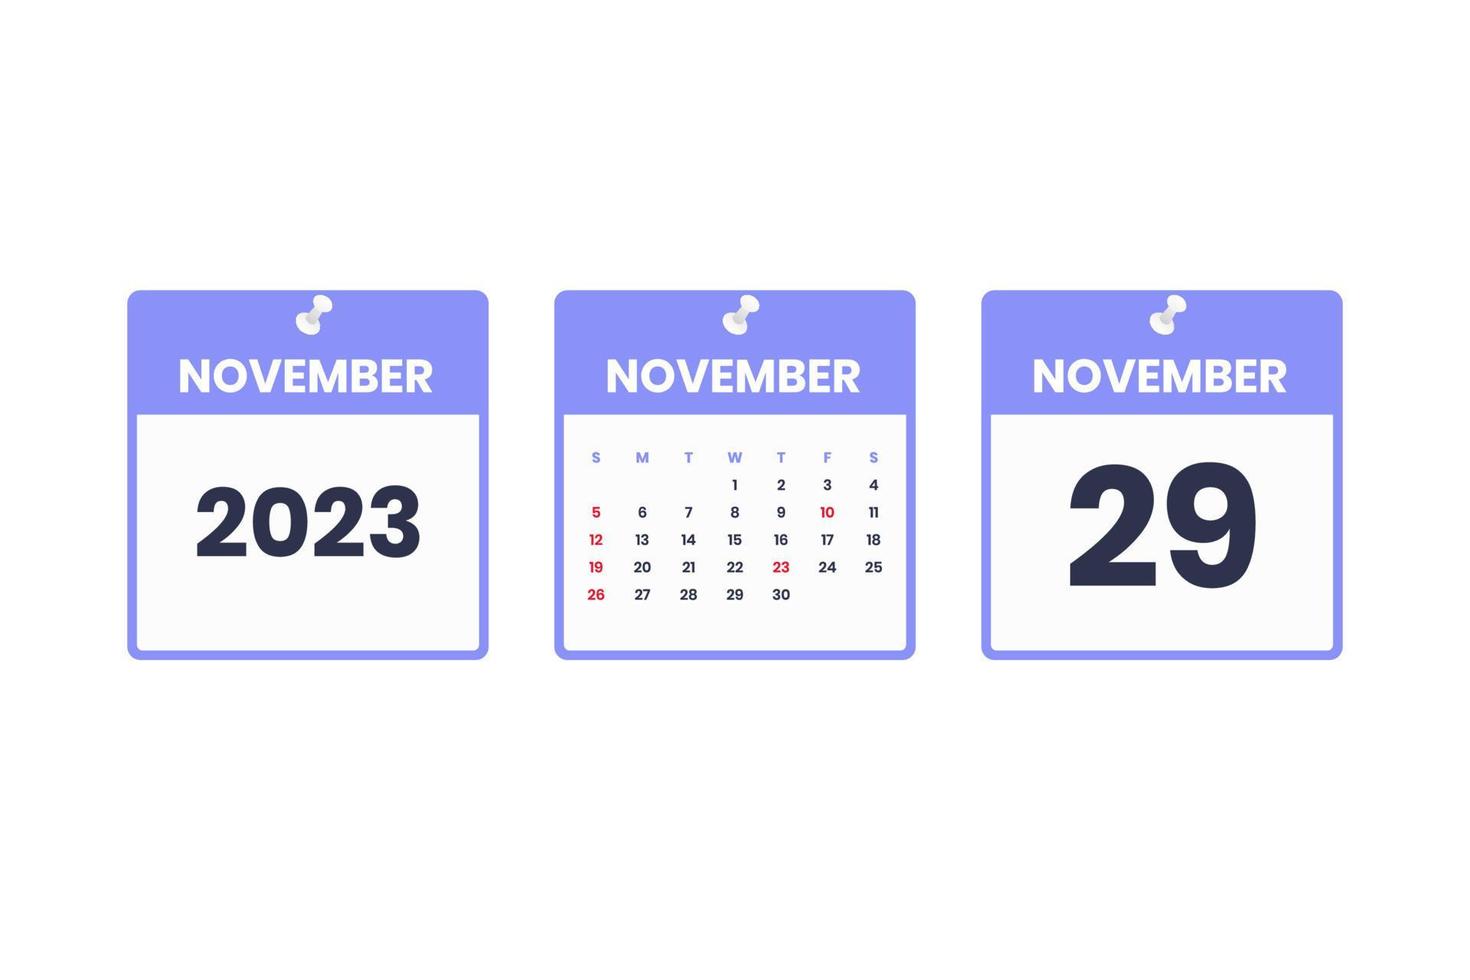 November-Kalender-Design. 29. November 2023 Kalendersymbol für Zeitplan, Termin, wichtiges Datumskonzept vektor